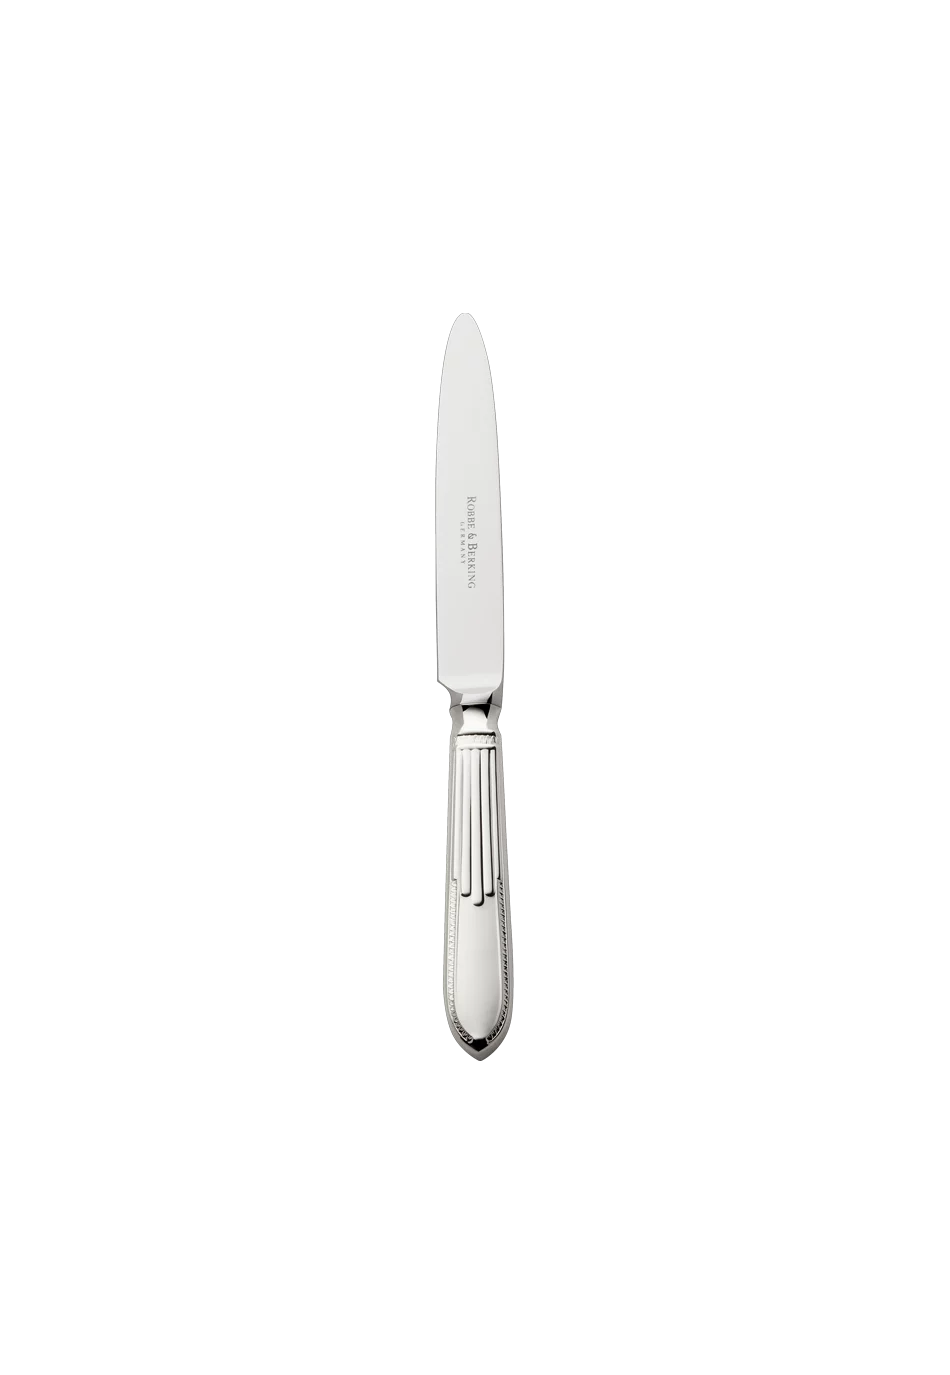 Belvedere Cake Knife / Fruit Knife (925 Sterling Silver)